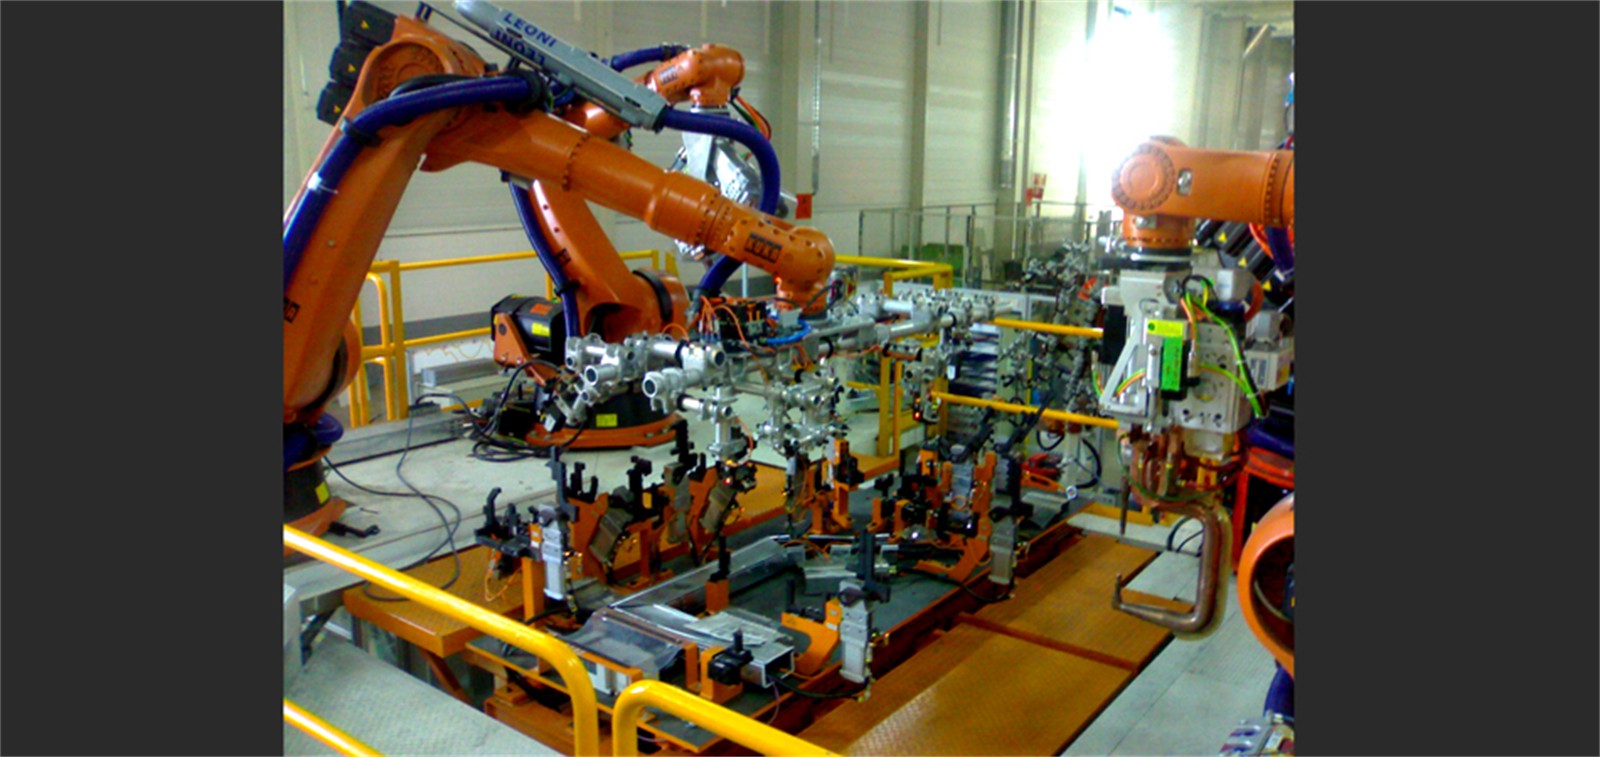 EUCOM Disegni industriali per automotive, aerospace e industria meccanica